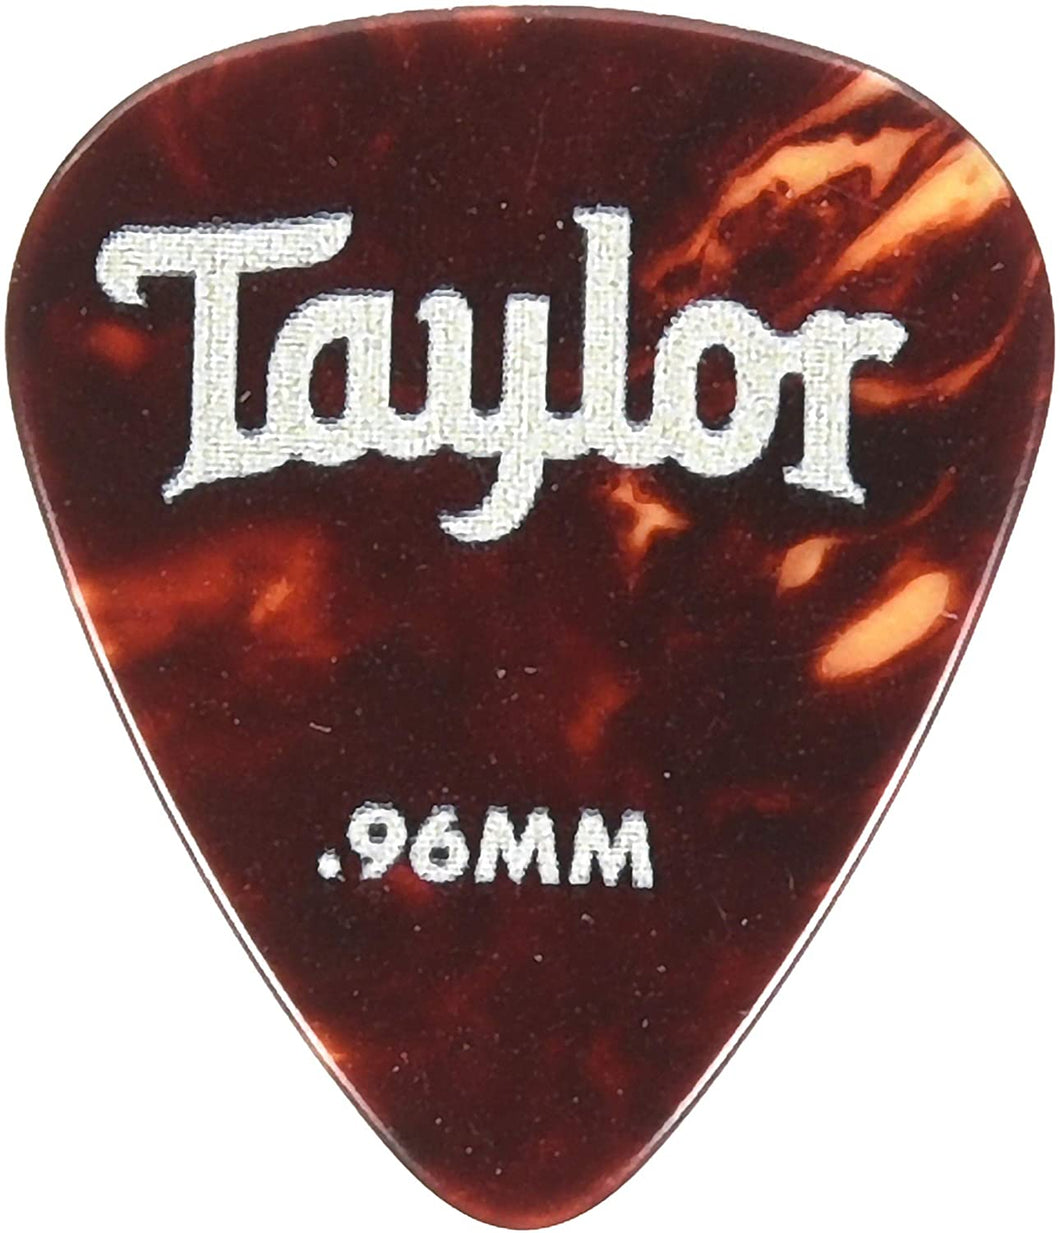 Taylor Picks - Celluloid 351, Tortoise Shell .96 mm, 12 Pack